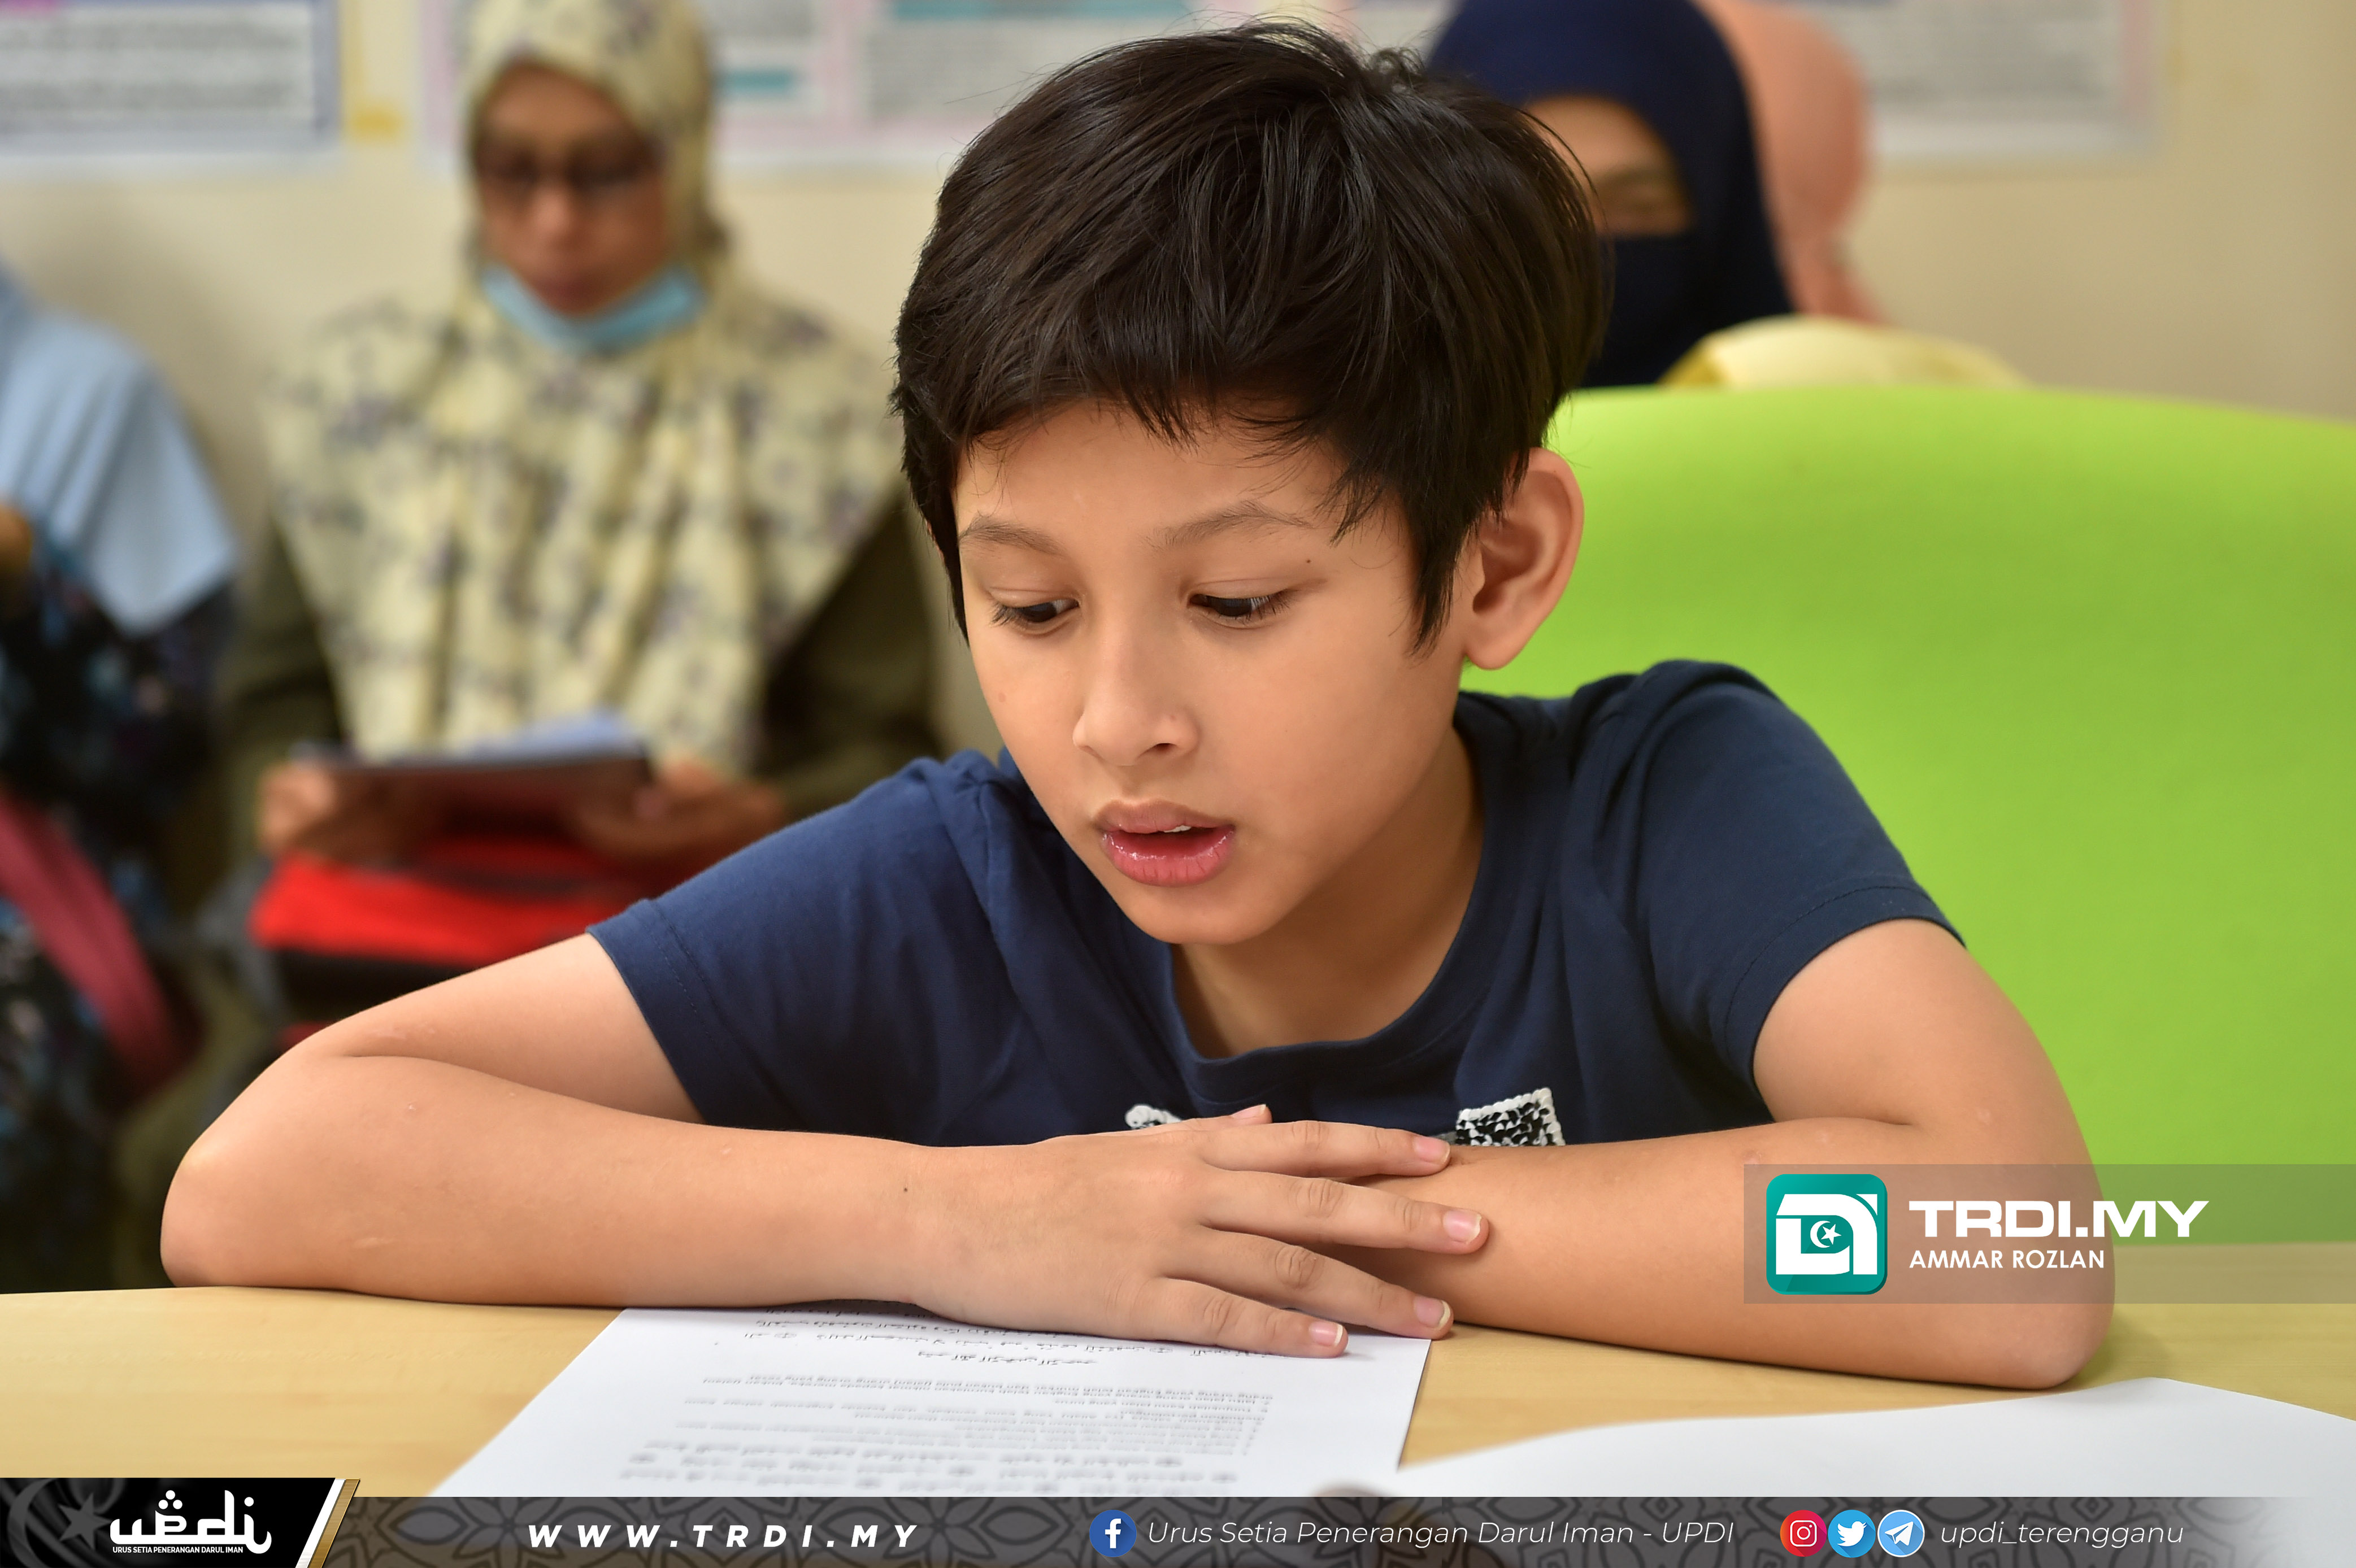 Program Perasmian Quranic Playgroup Austisme untuk anak-anak OKU (Bajet Kerajaan Negeri) di Unisza 